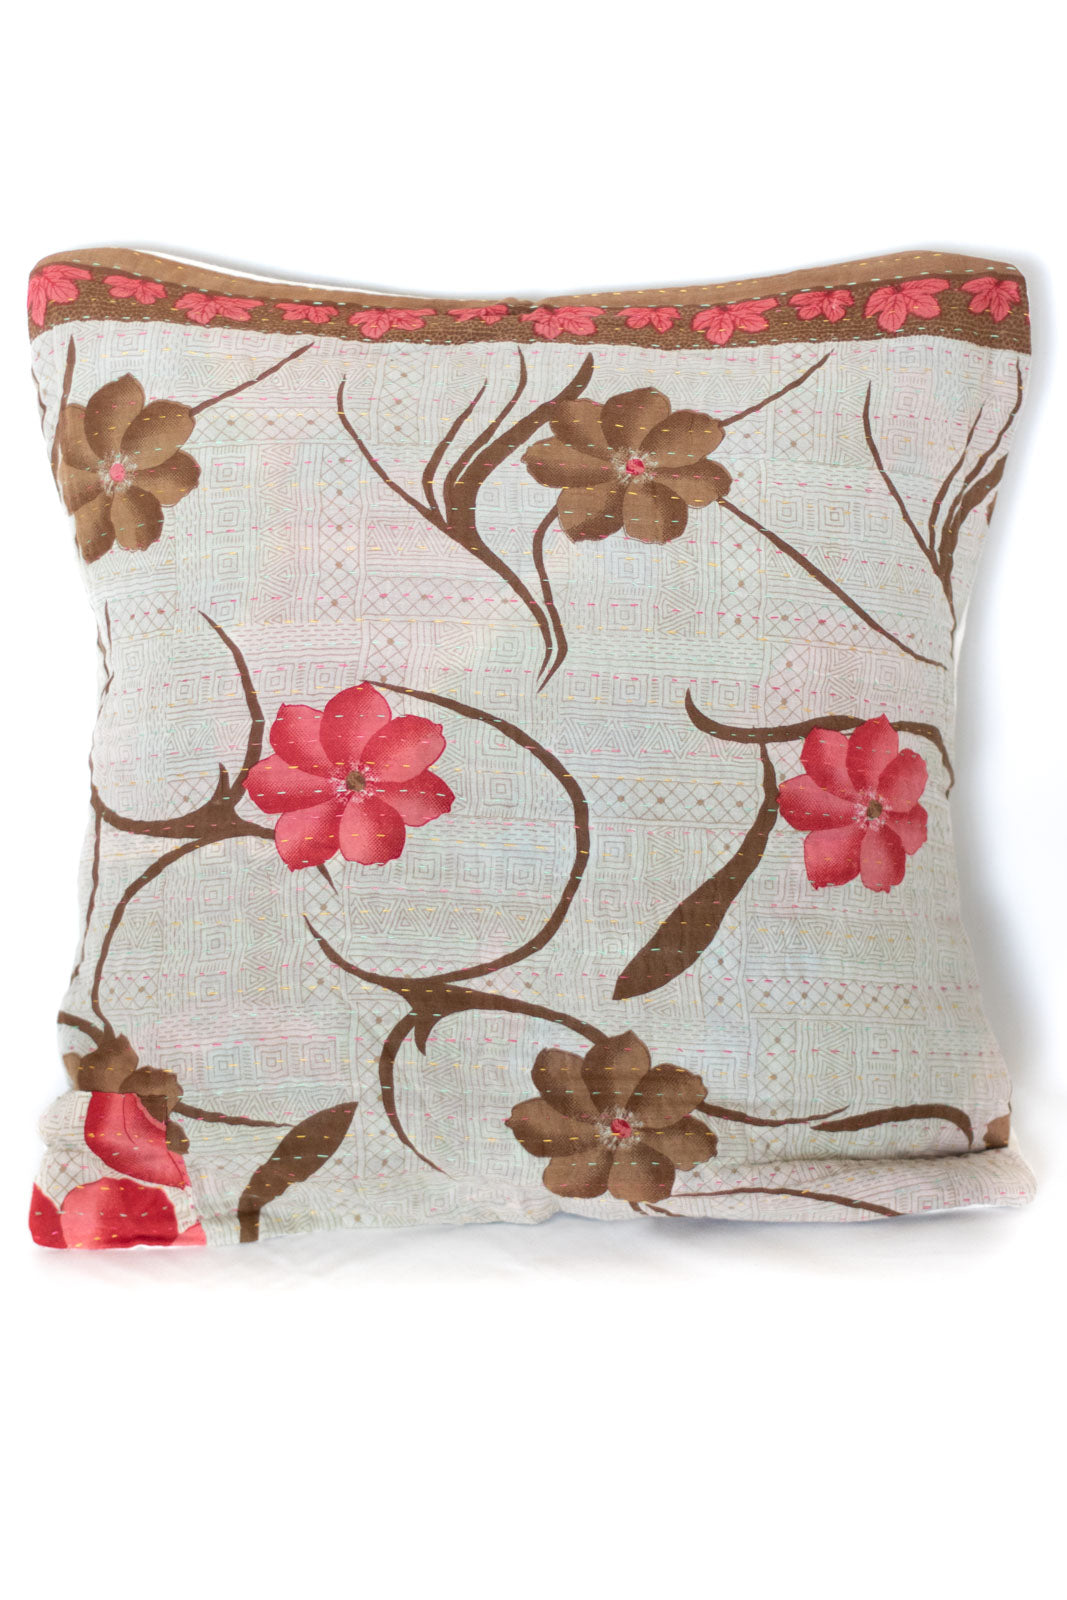 Grace no. 2 Kantha Pillow Cover